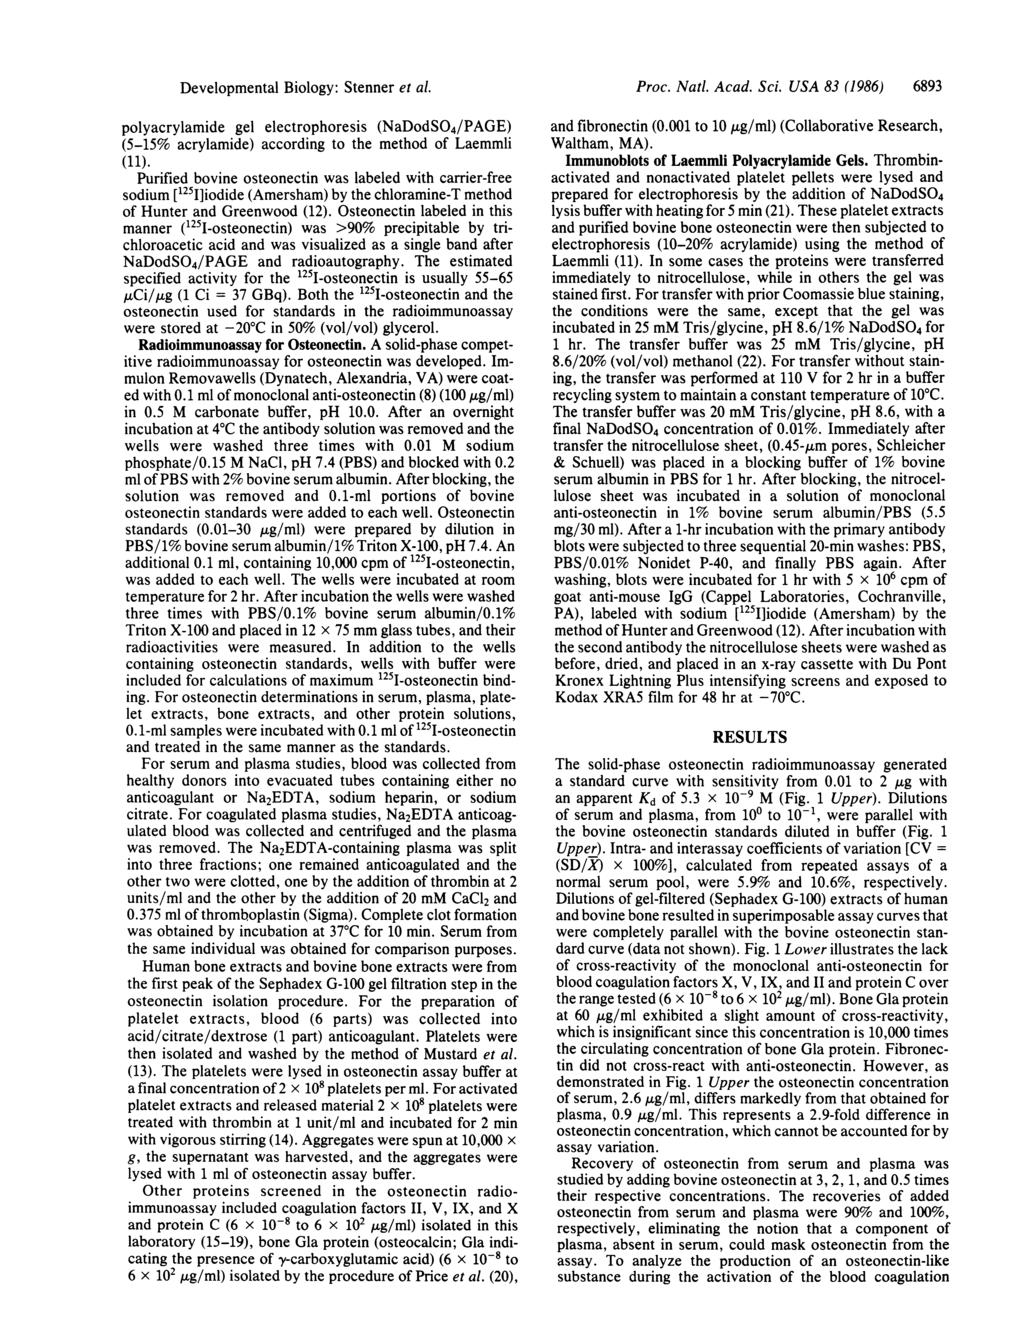 Developmental Biology: Stenner et al. polyacrylamide gel electrophoresis (NaDodSO4/PAGE) (5-15% acrylamide) according to the method of Laemmli (11).